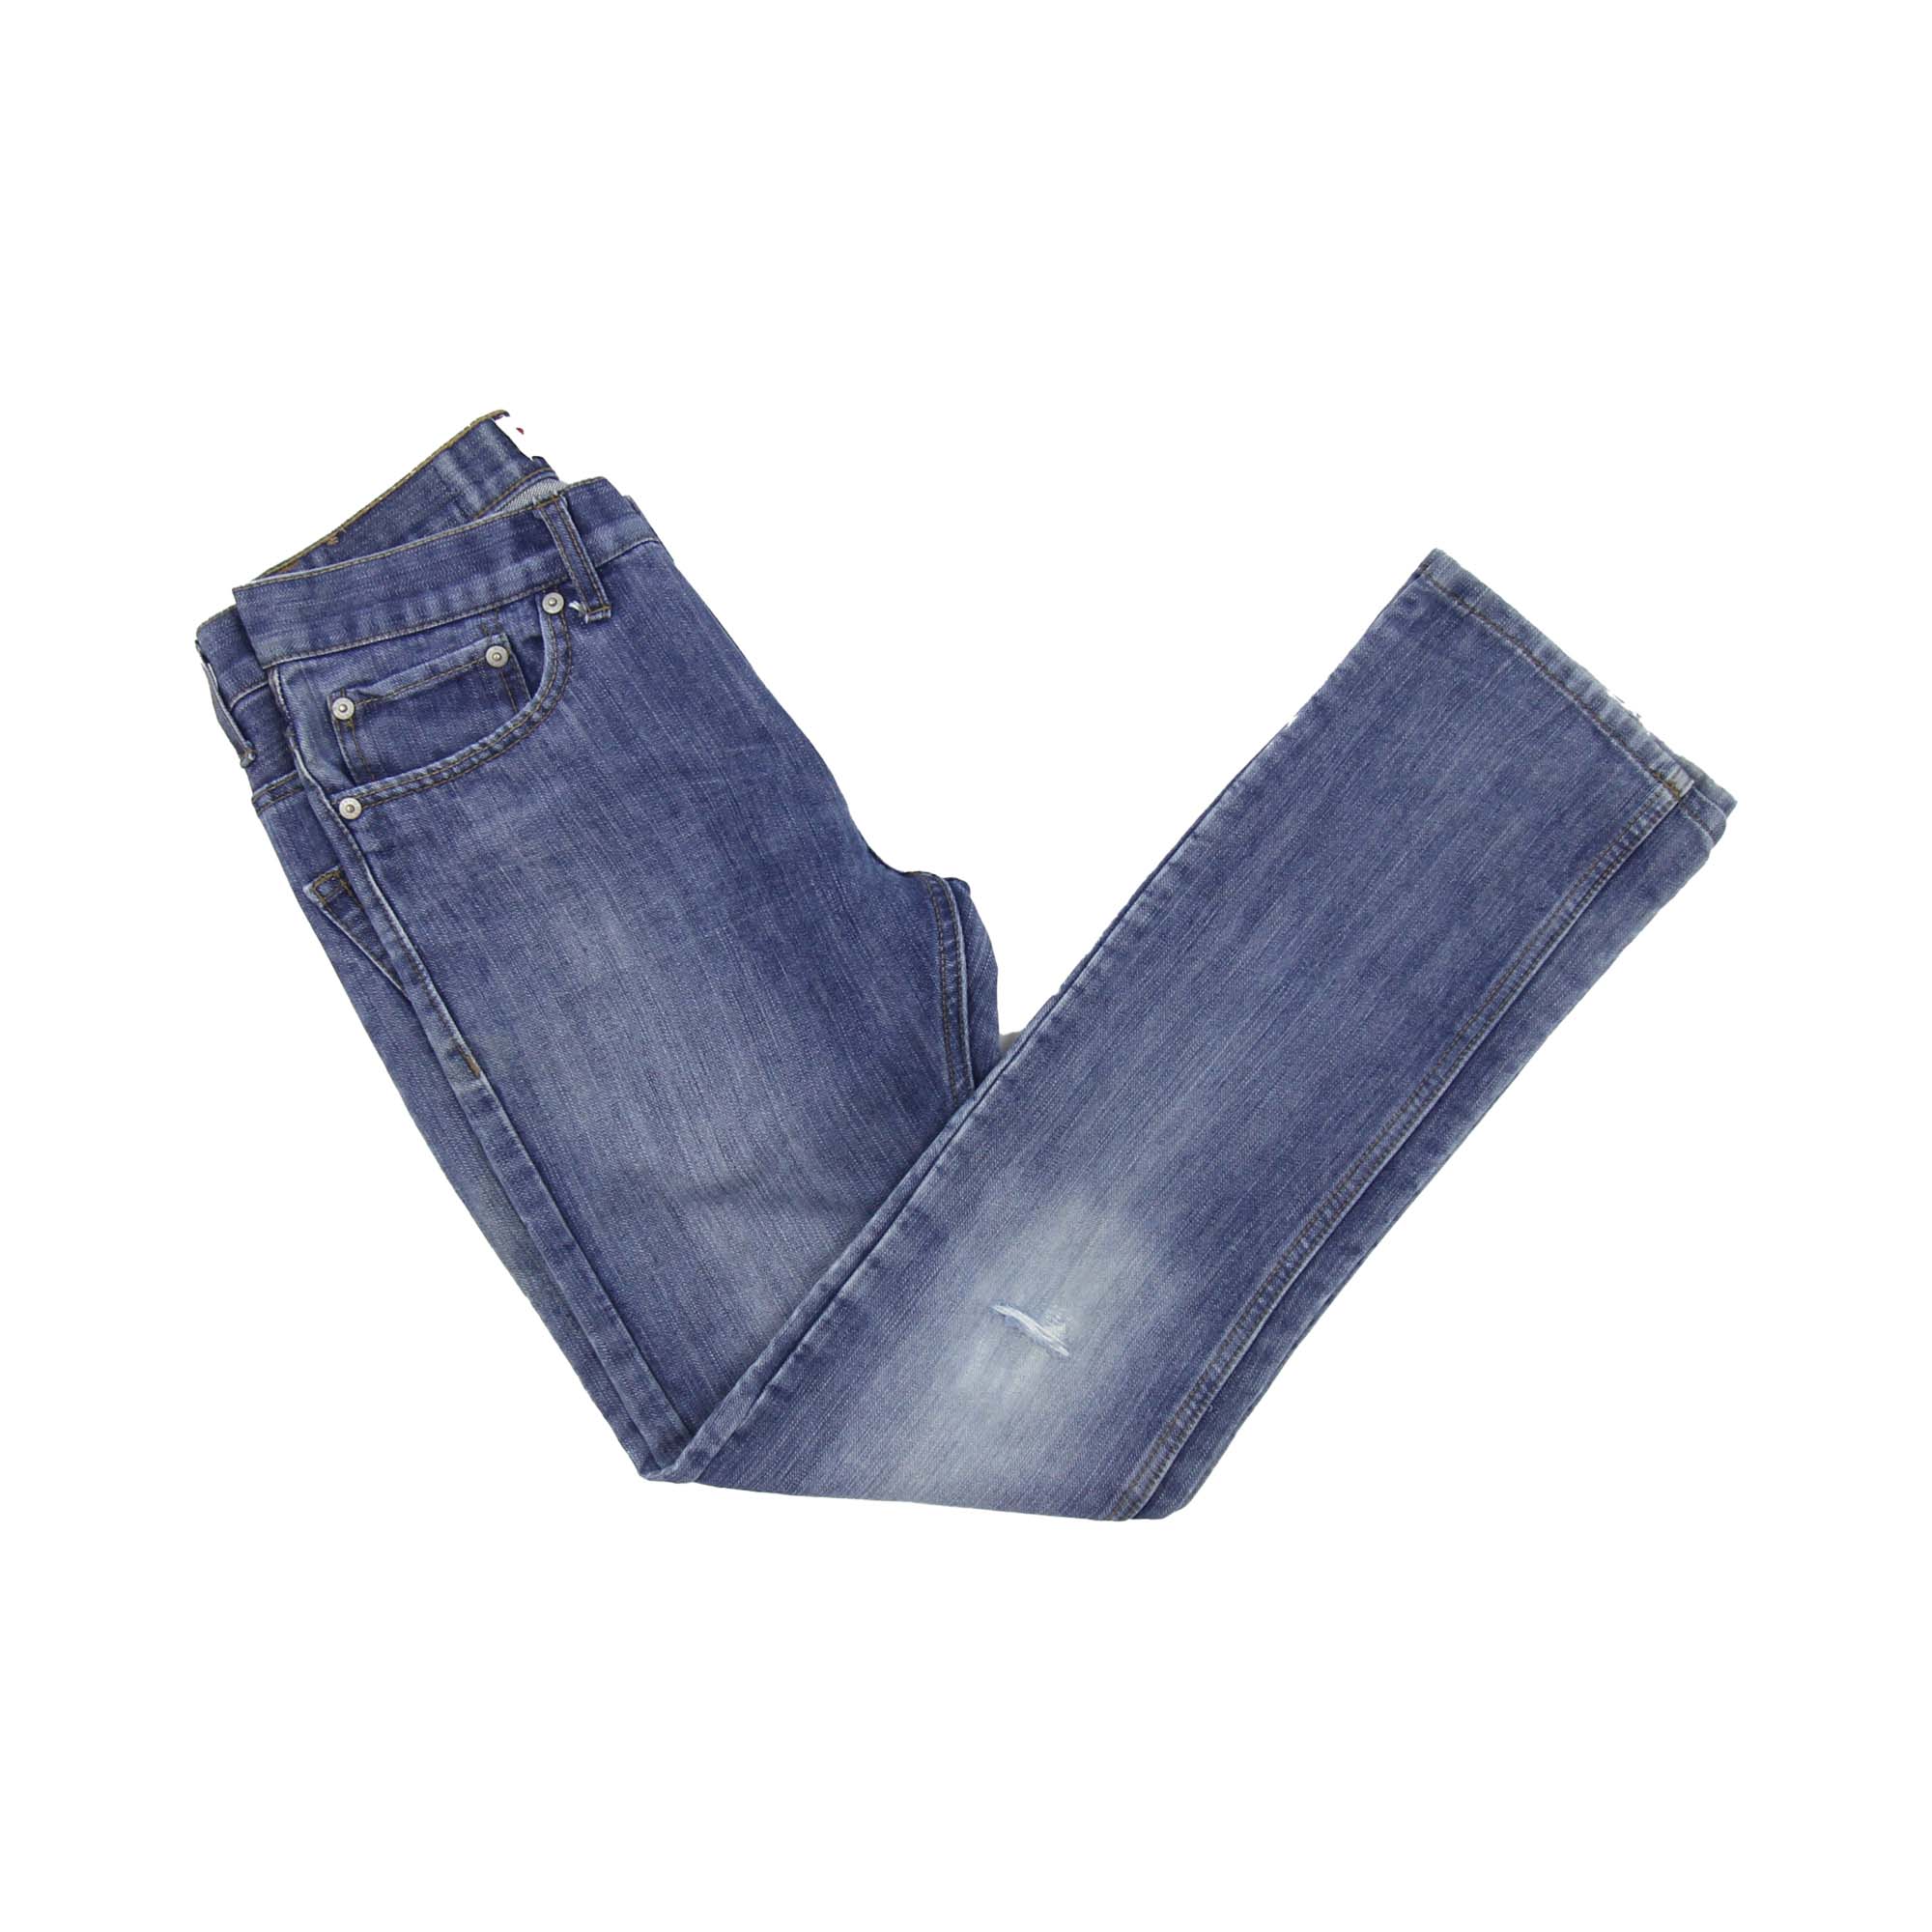 Advertisement Africa Scorch Levi's 511 Slim Jeans - W28 L28 | W0402